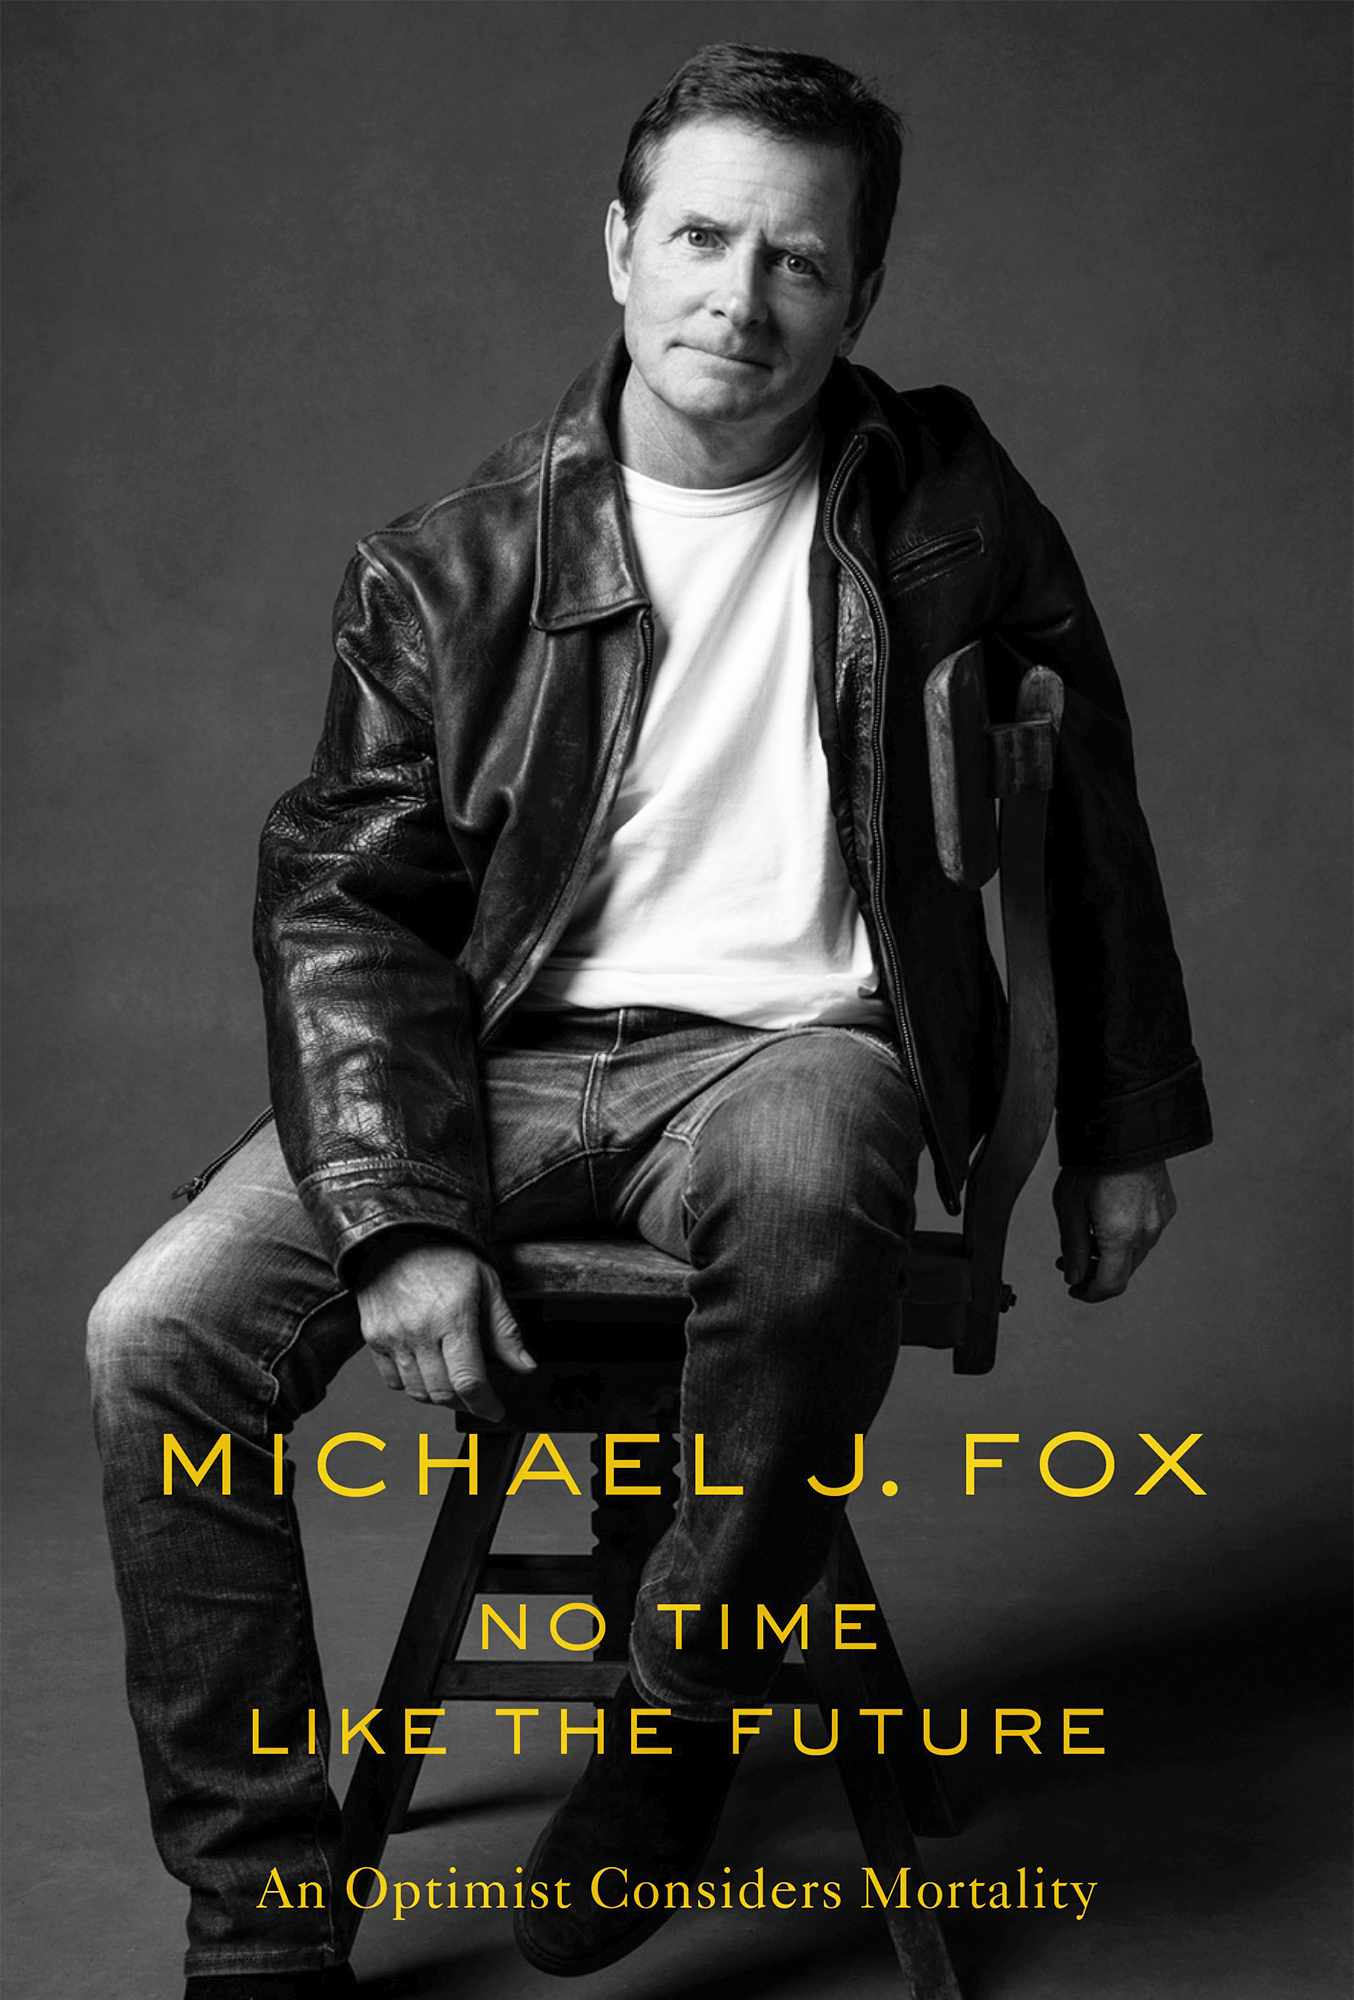 Michael J Fox book cover